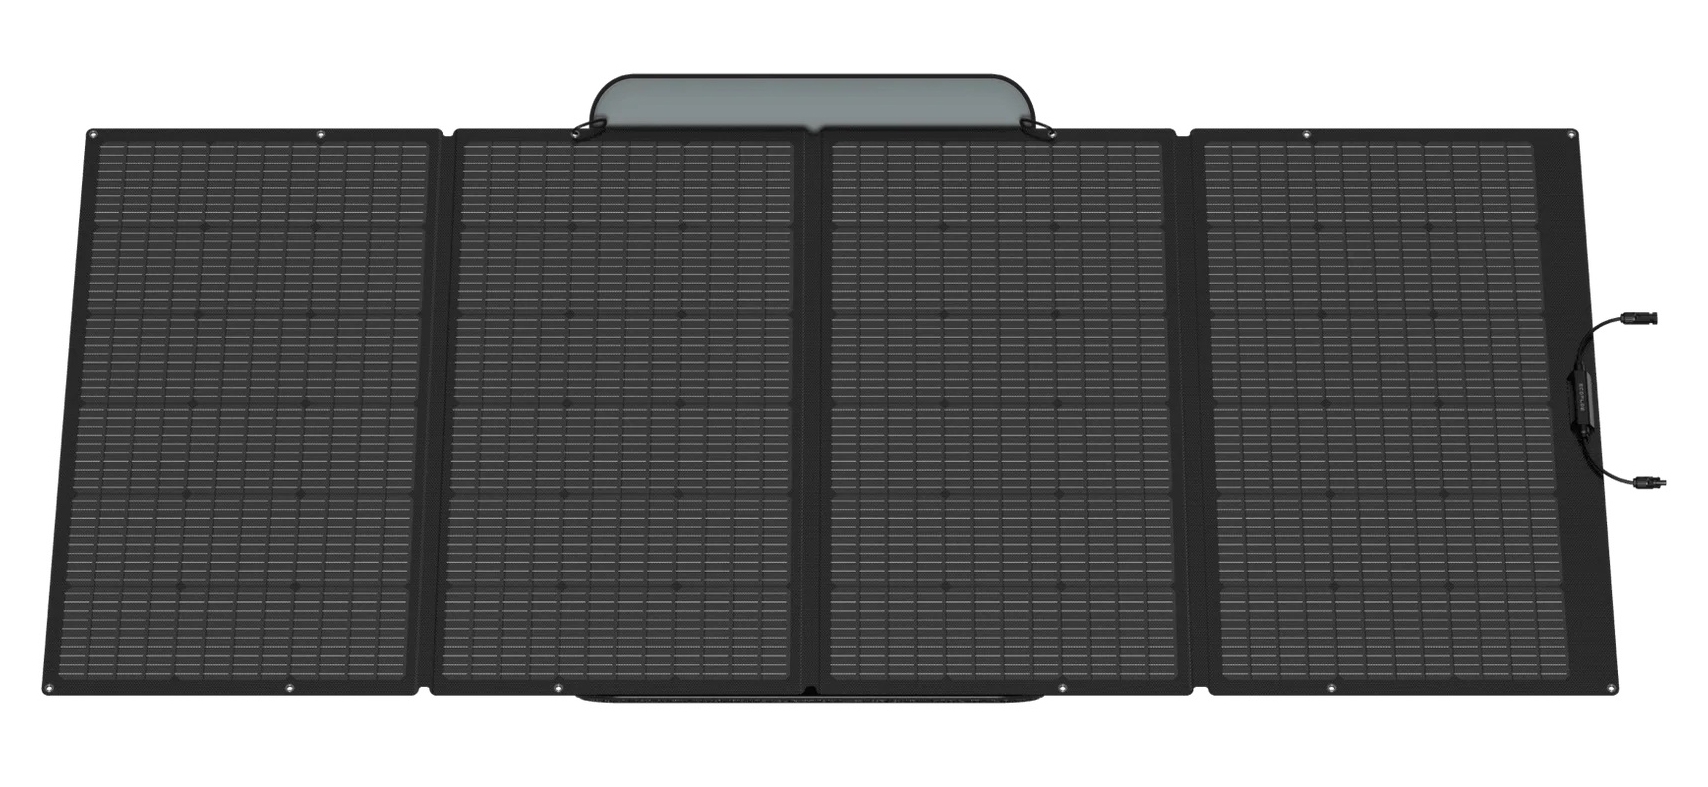 EcoFlow 400W Tragbares Solarpanel Artikel Nr. 44-600-1006